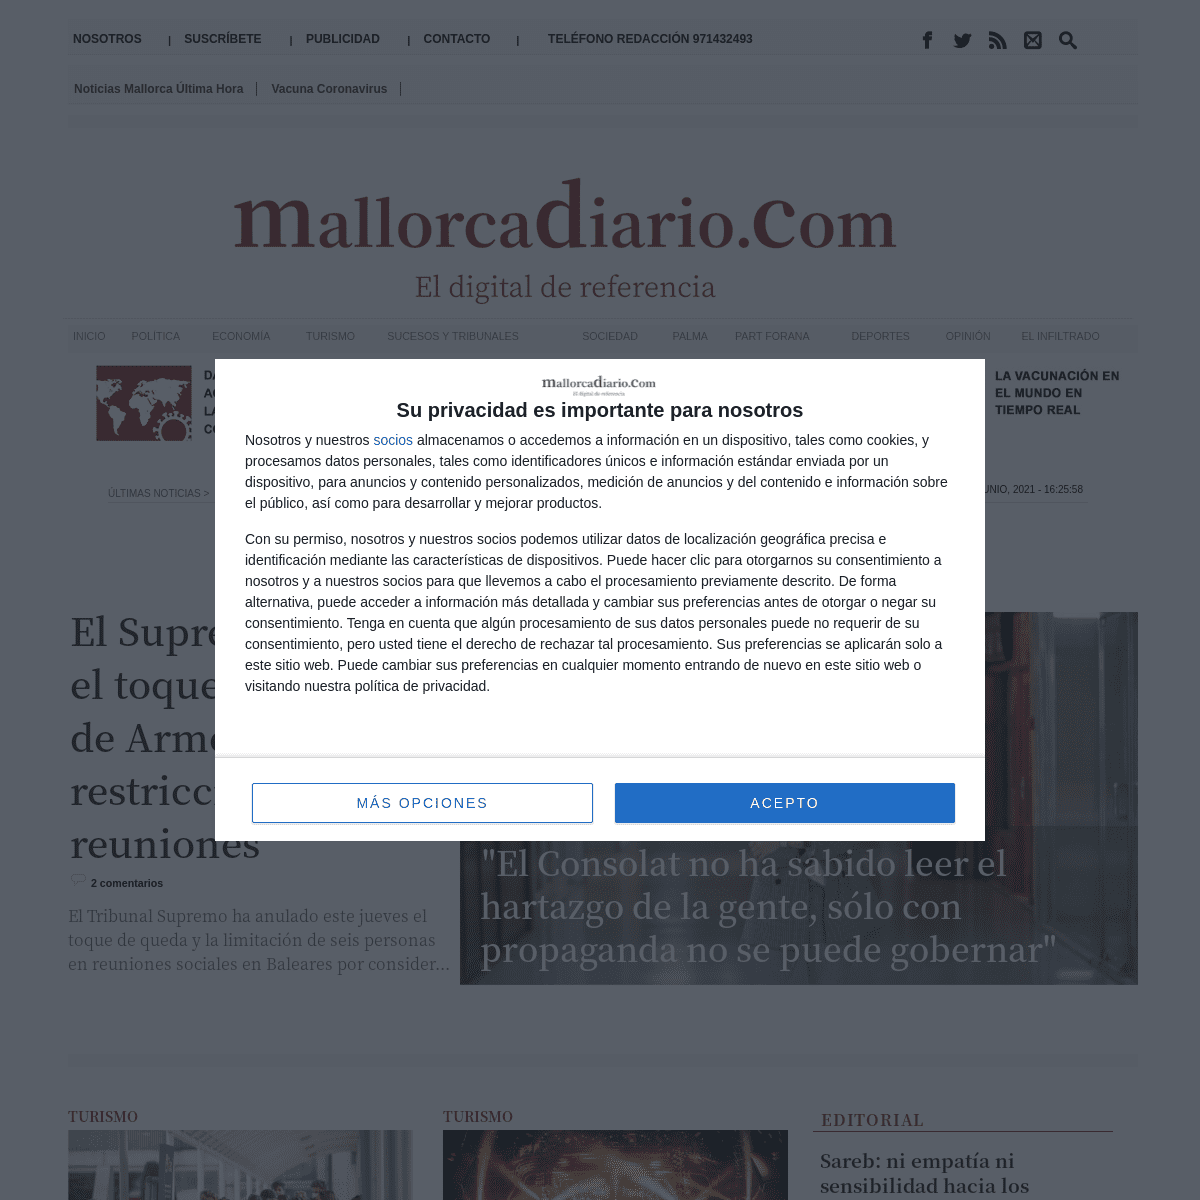 A complete backup of https://mallorcadiario.com